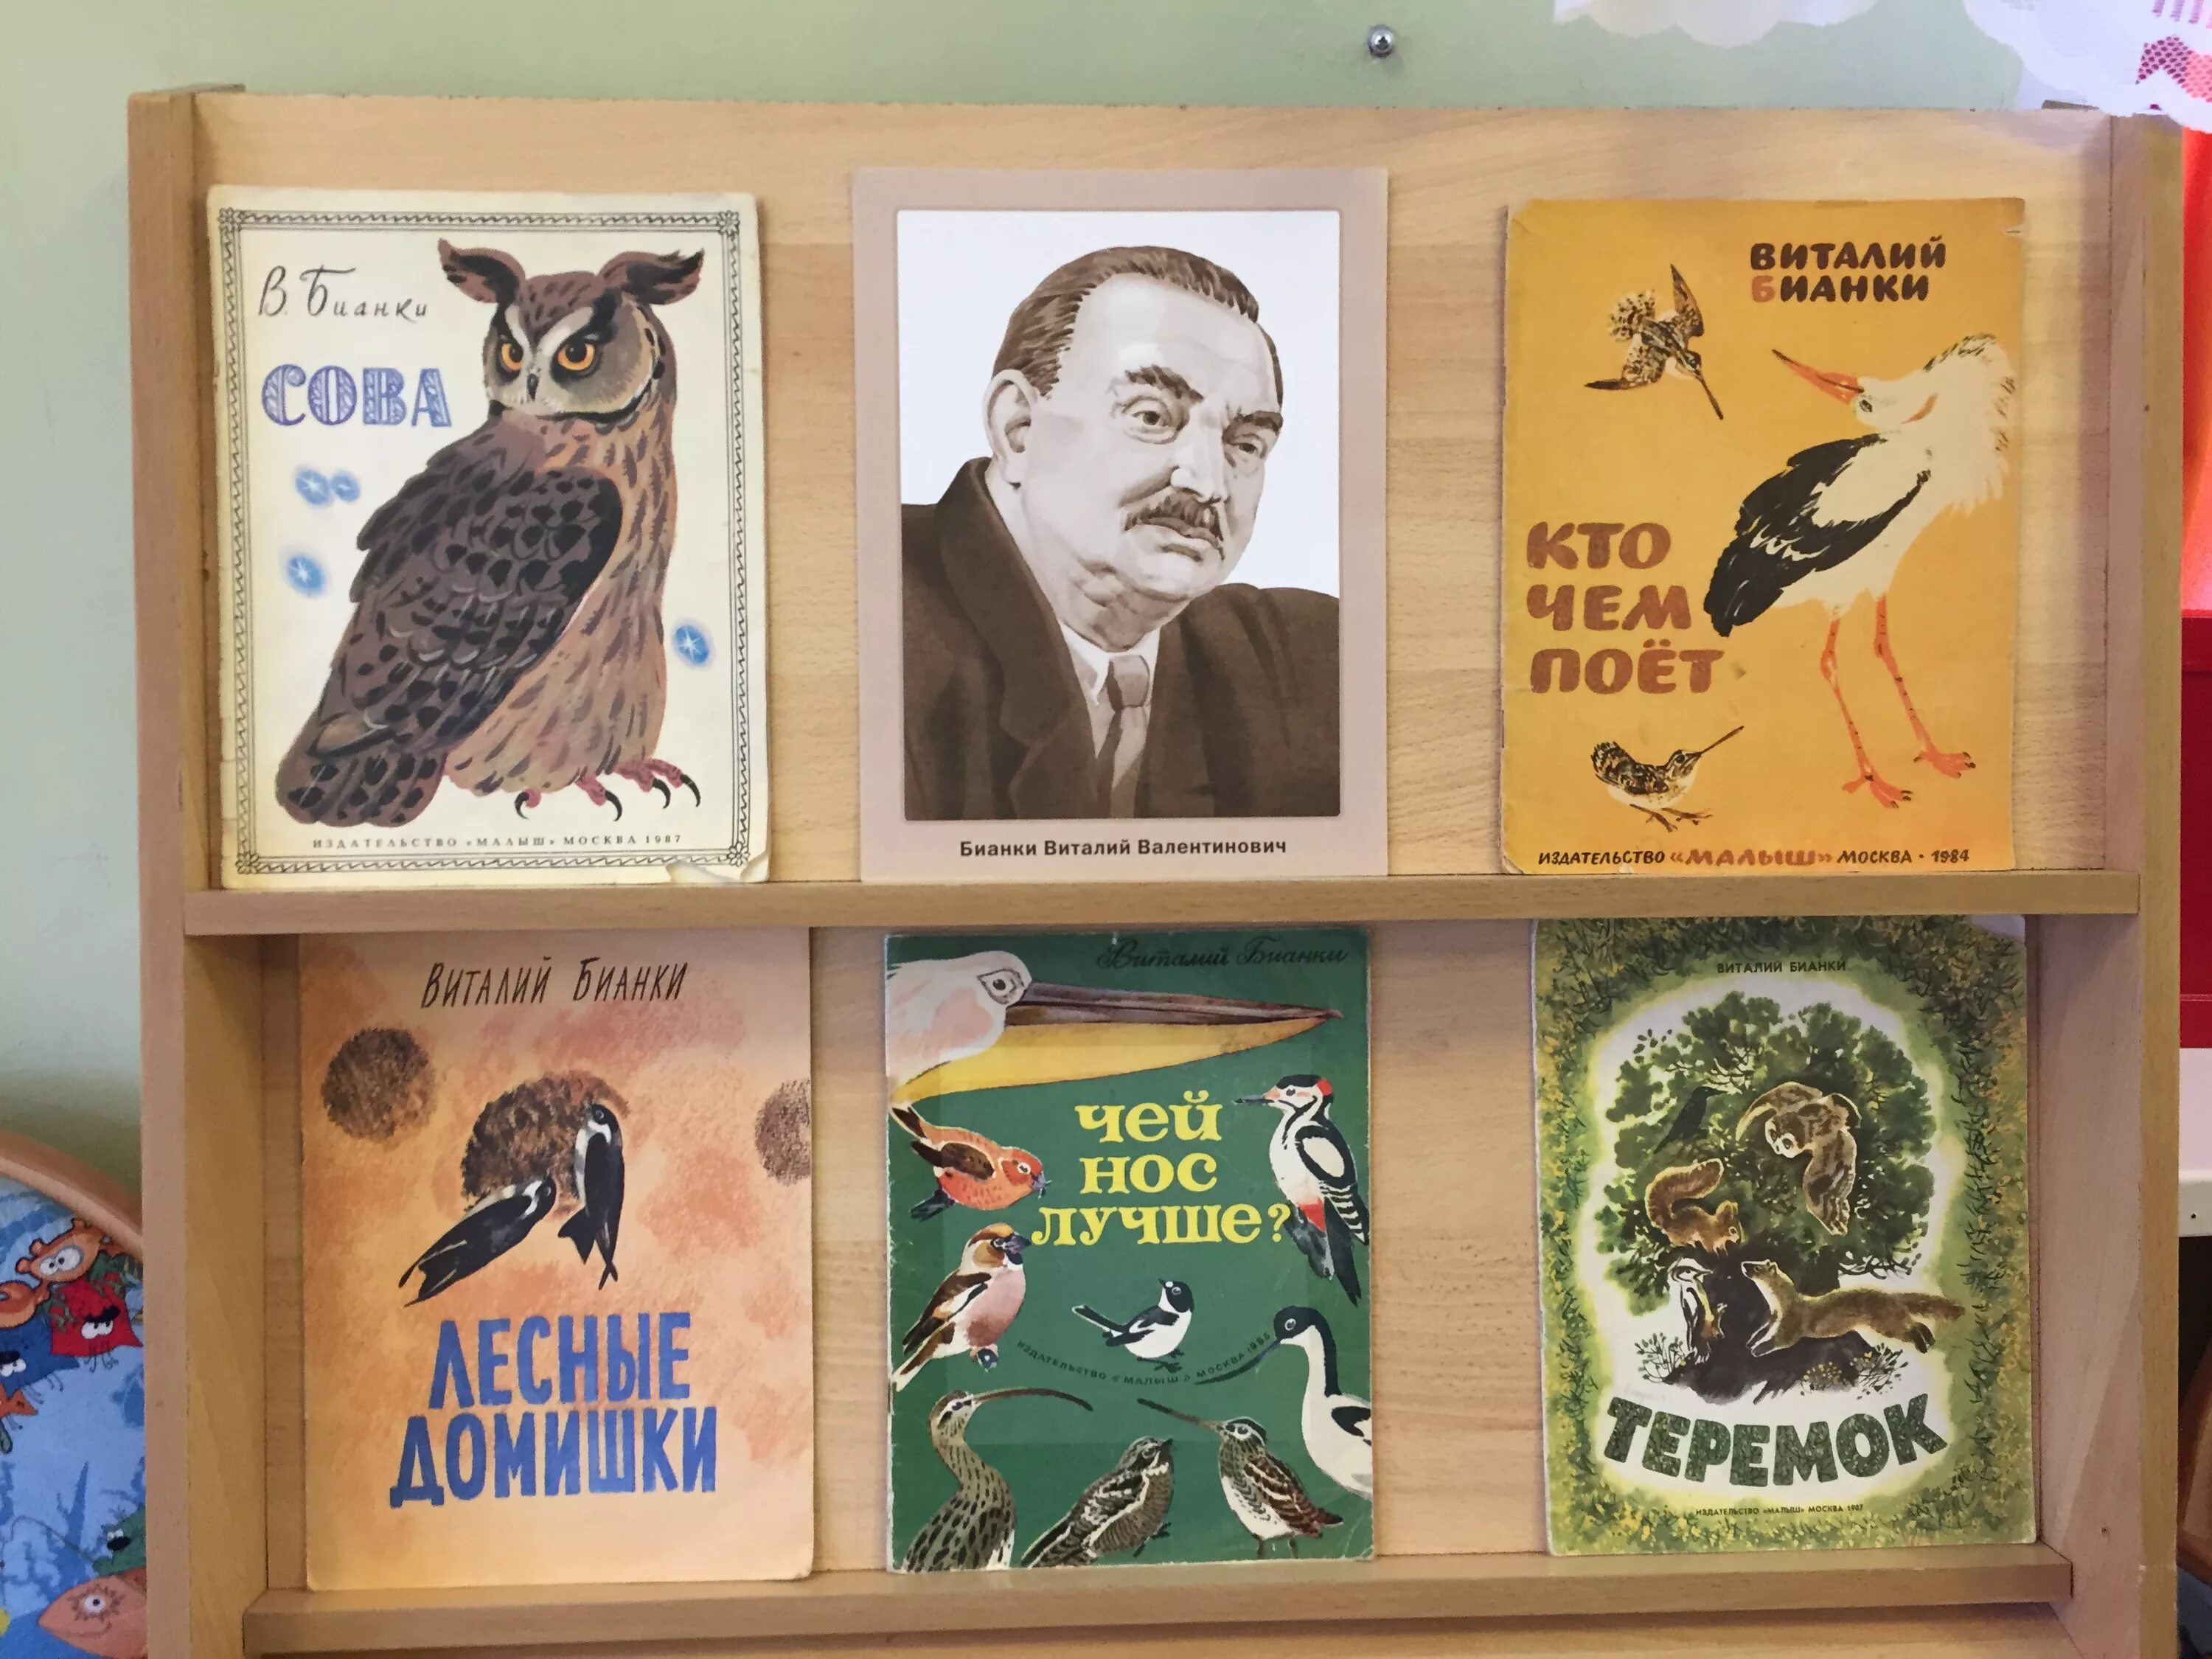 Выставка книг Виталия Бианки.